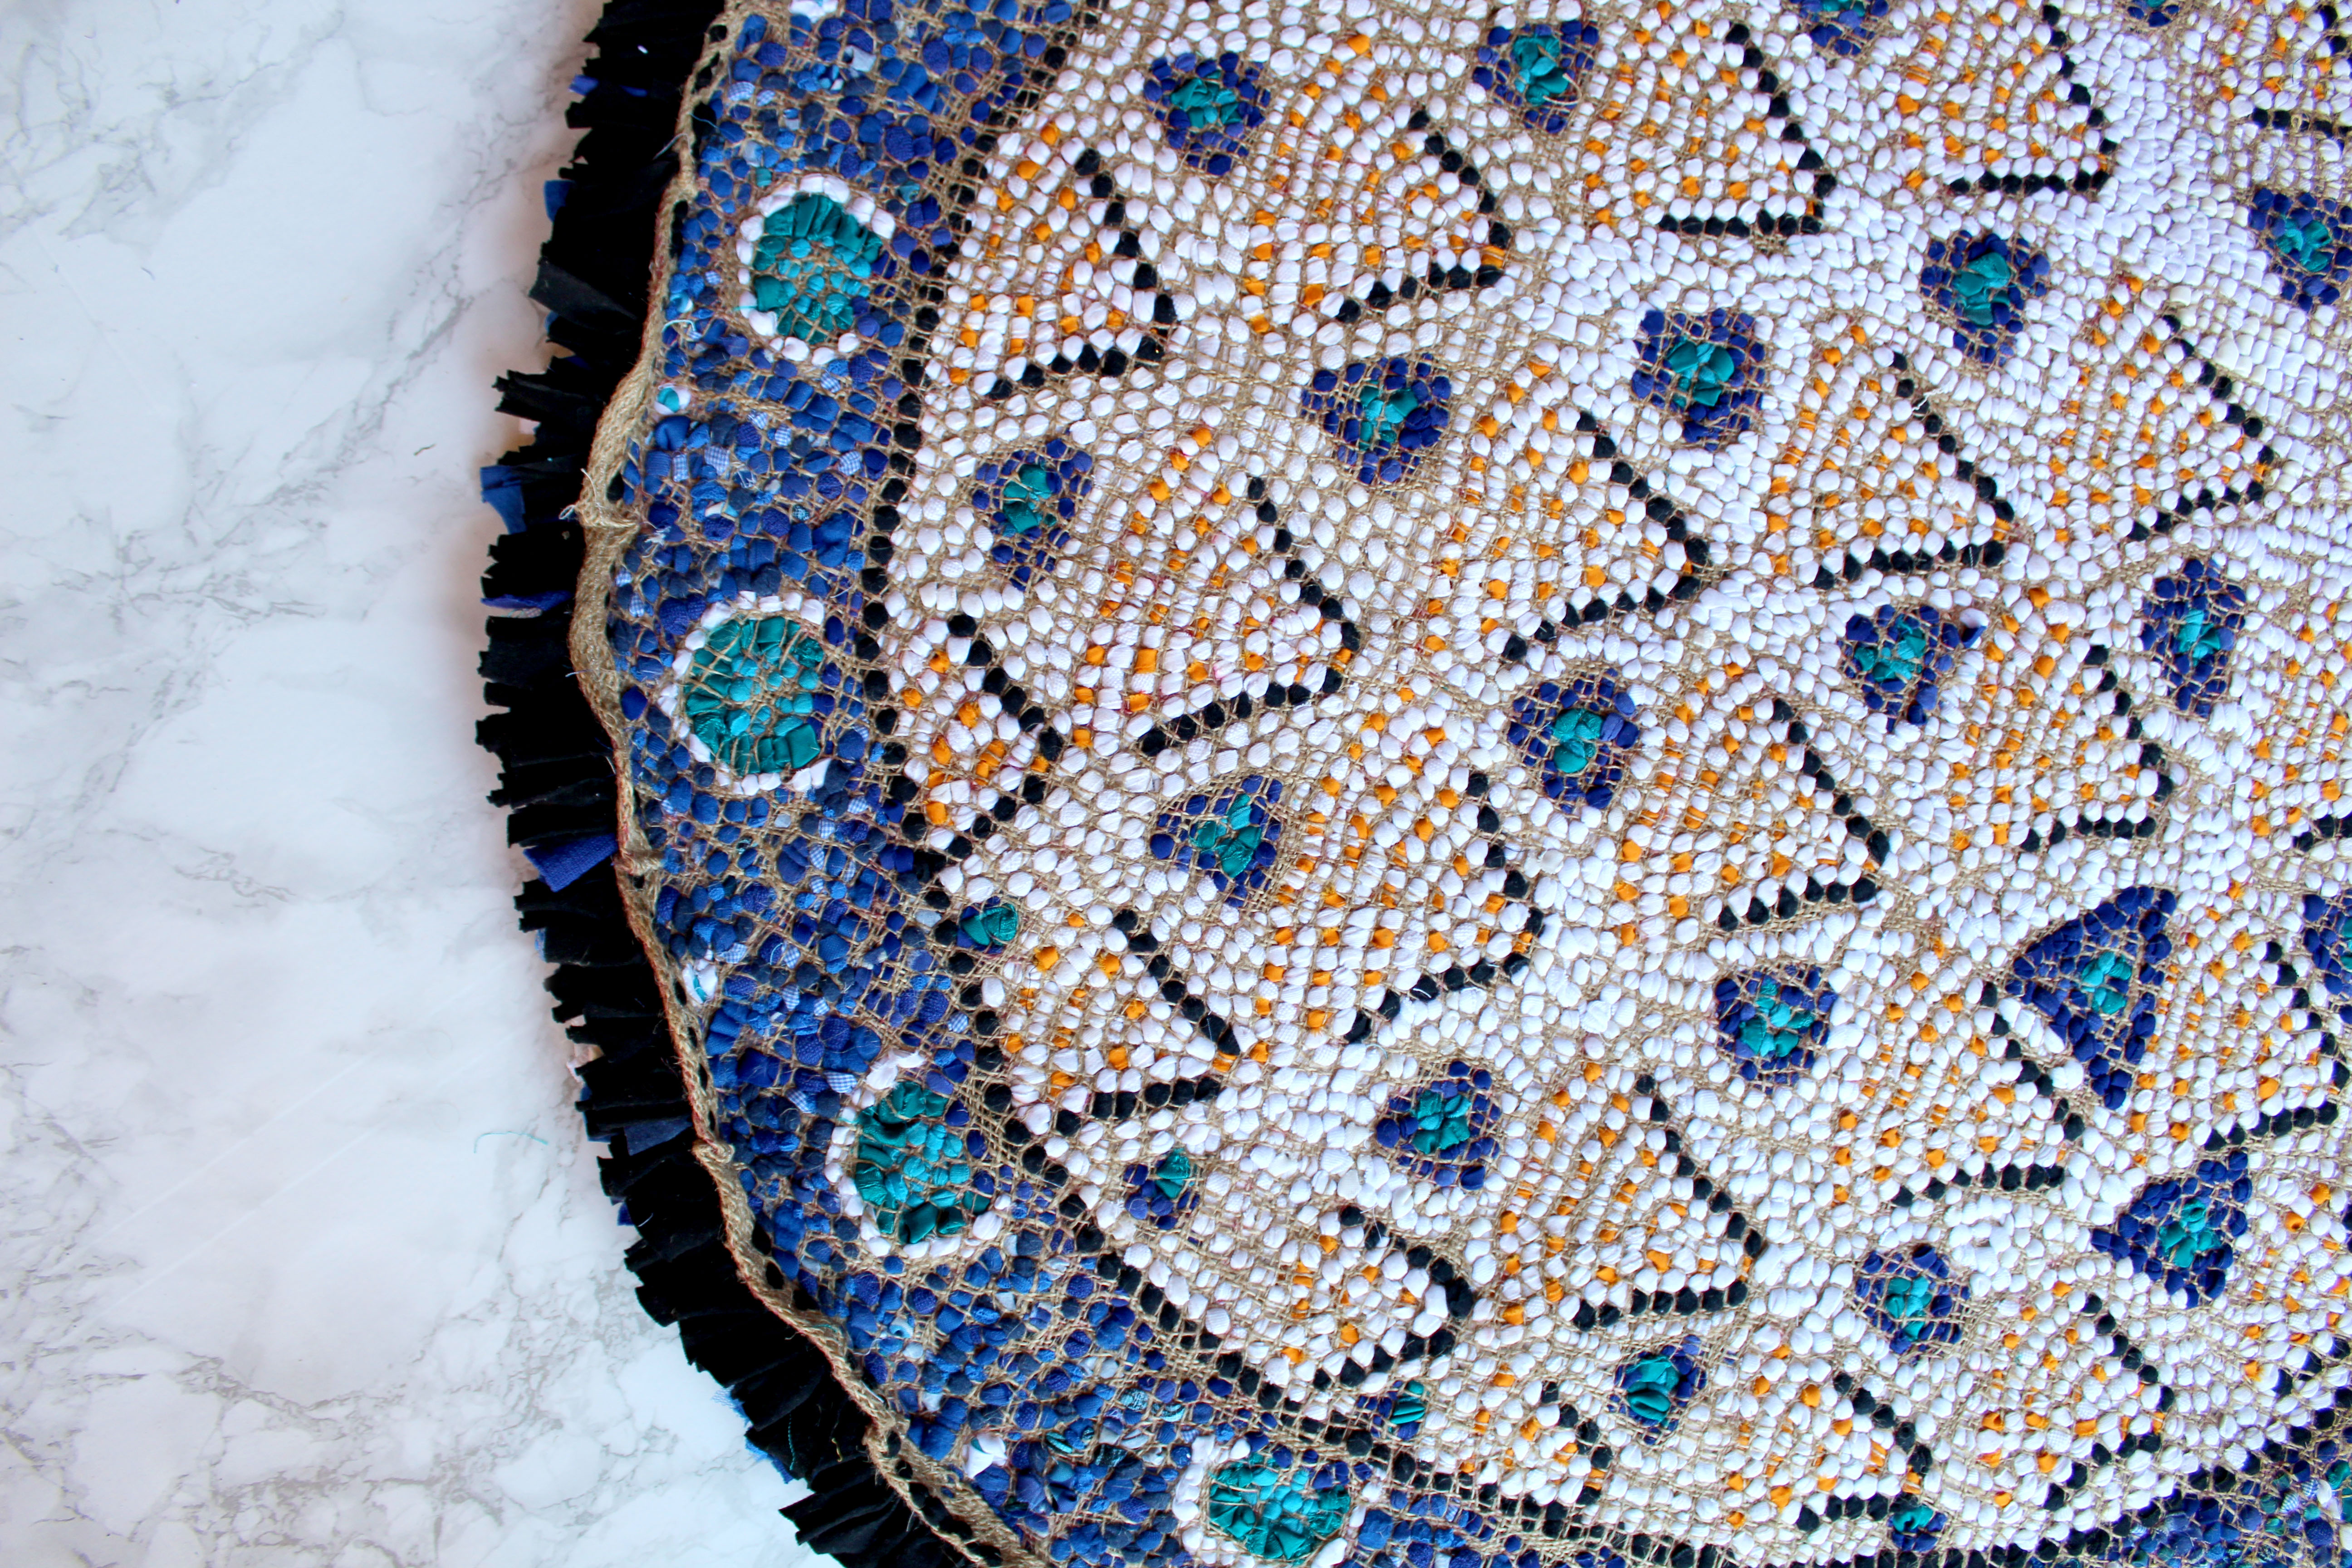 Circular rag rug based on an Iznik plate design with blue, white and orange. Back of rag rug